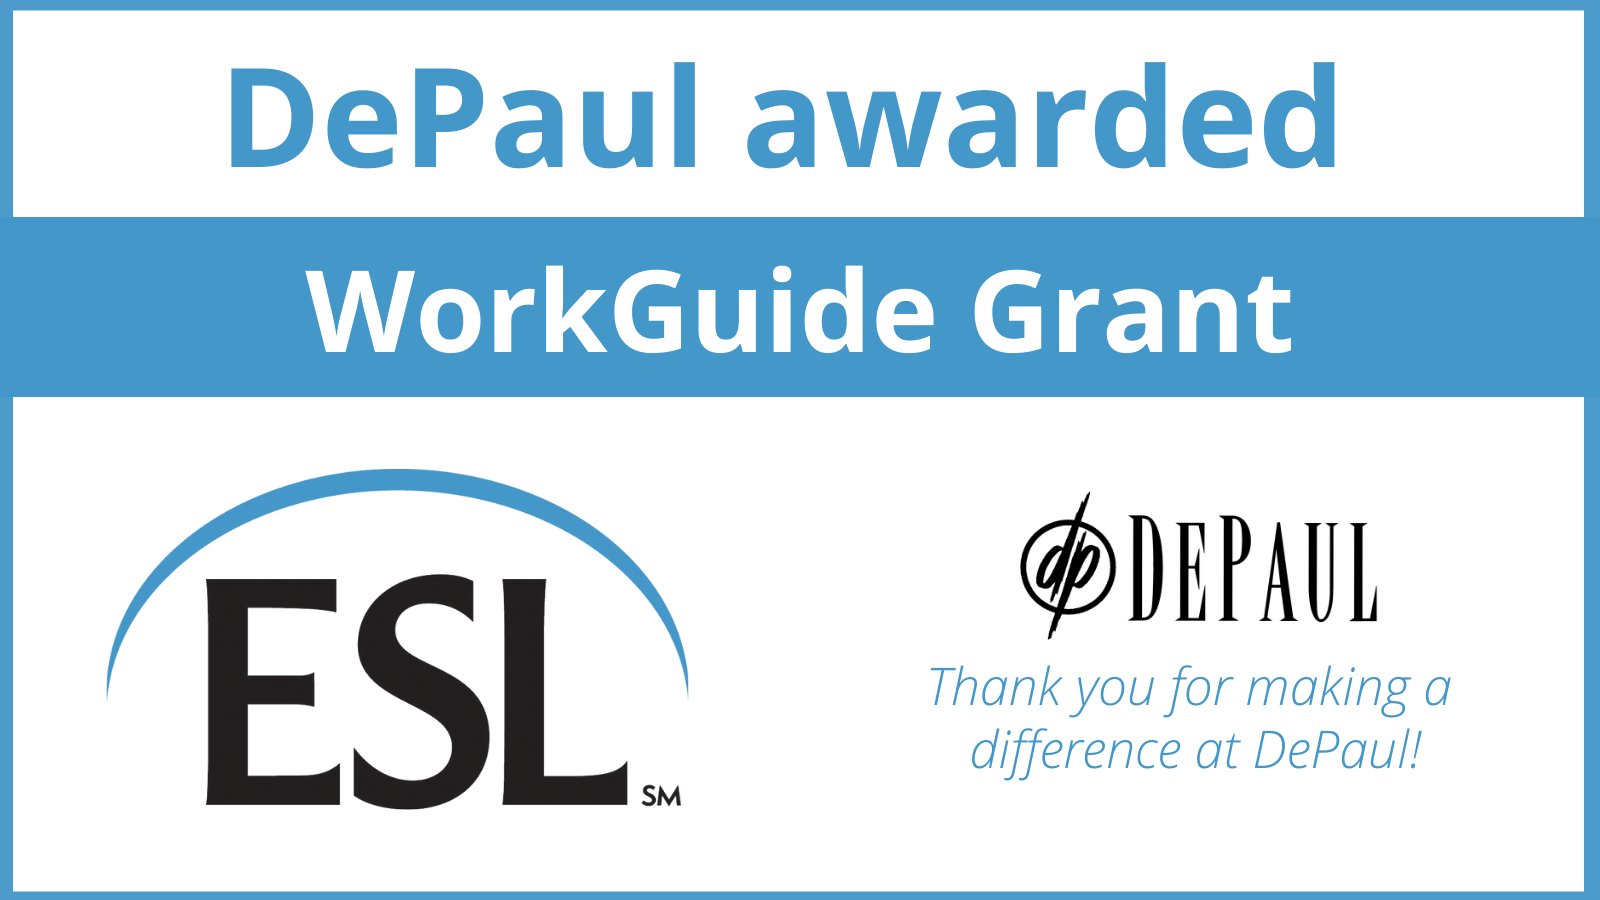 DePaul’s WorkGuide Receives Grant